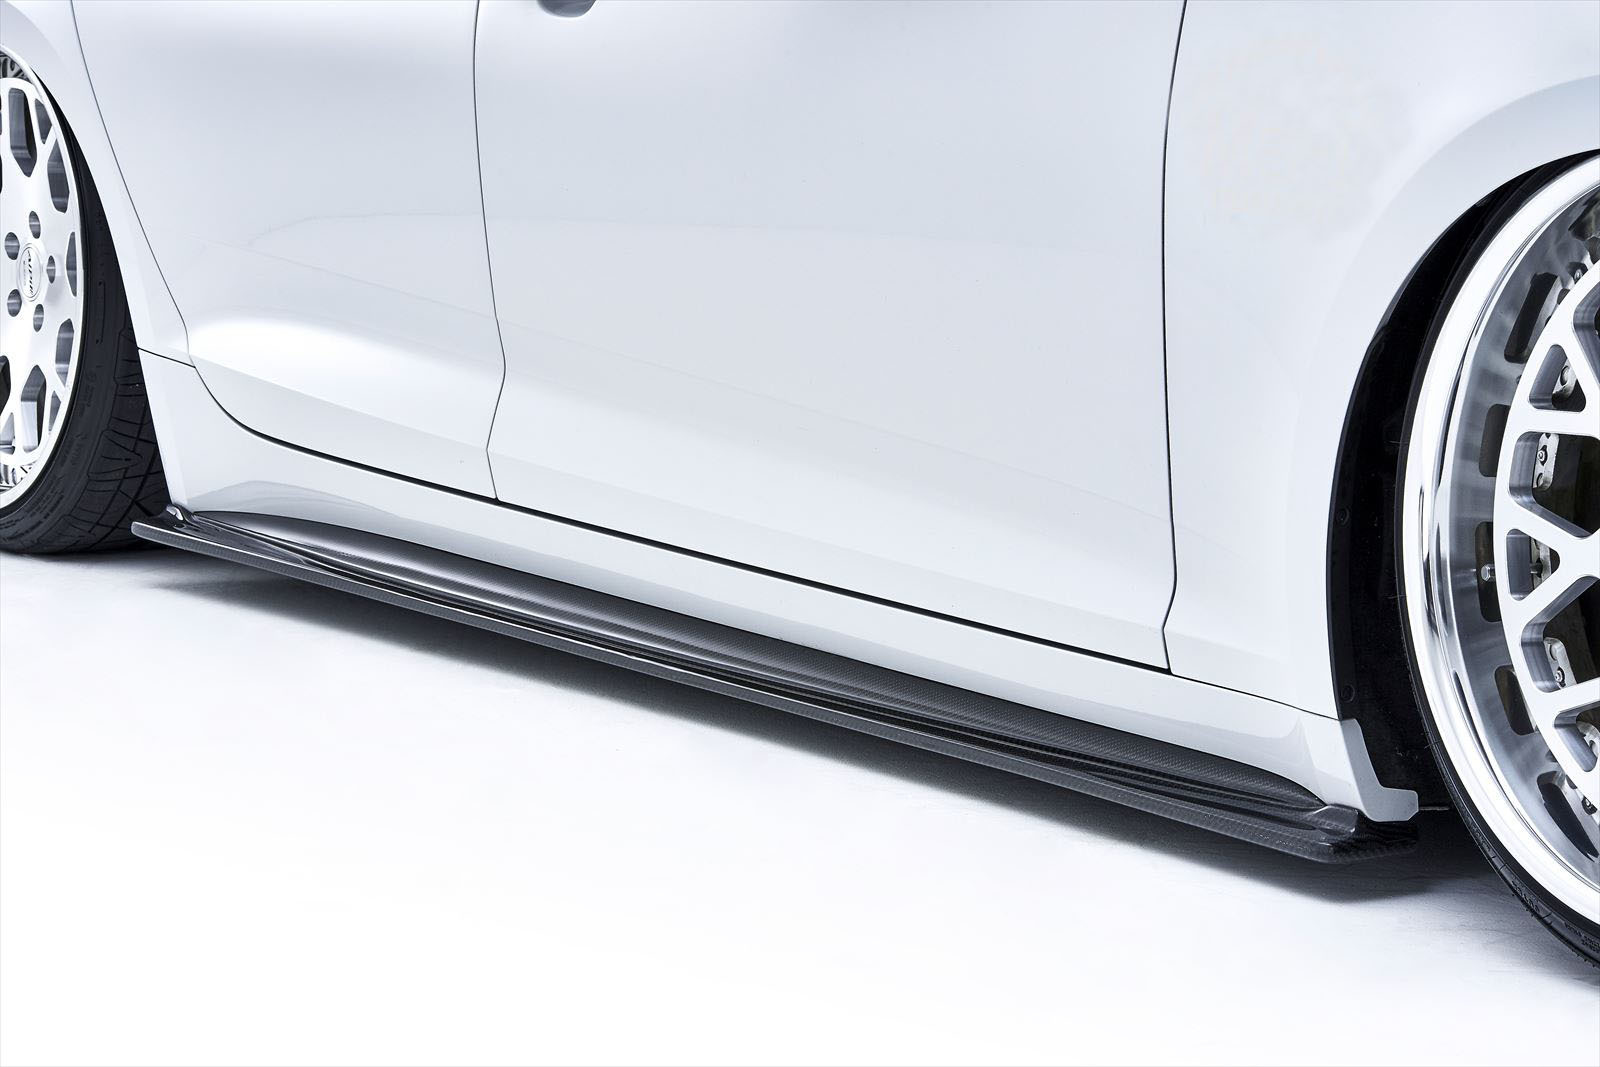 NEWING Bodi Kit for Audi S5 / A5 S-Line Sportback carbon fiber